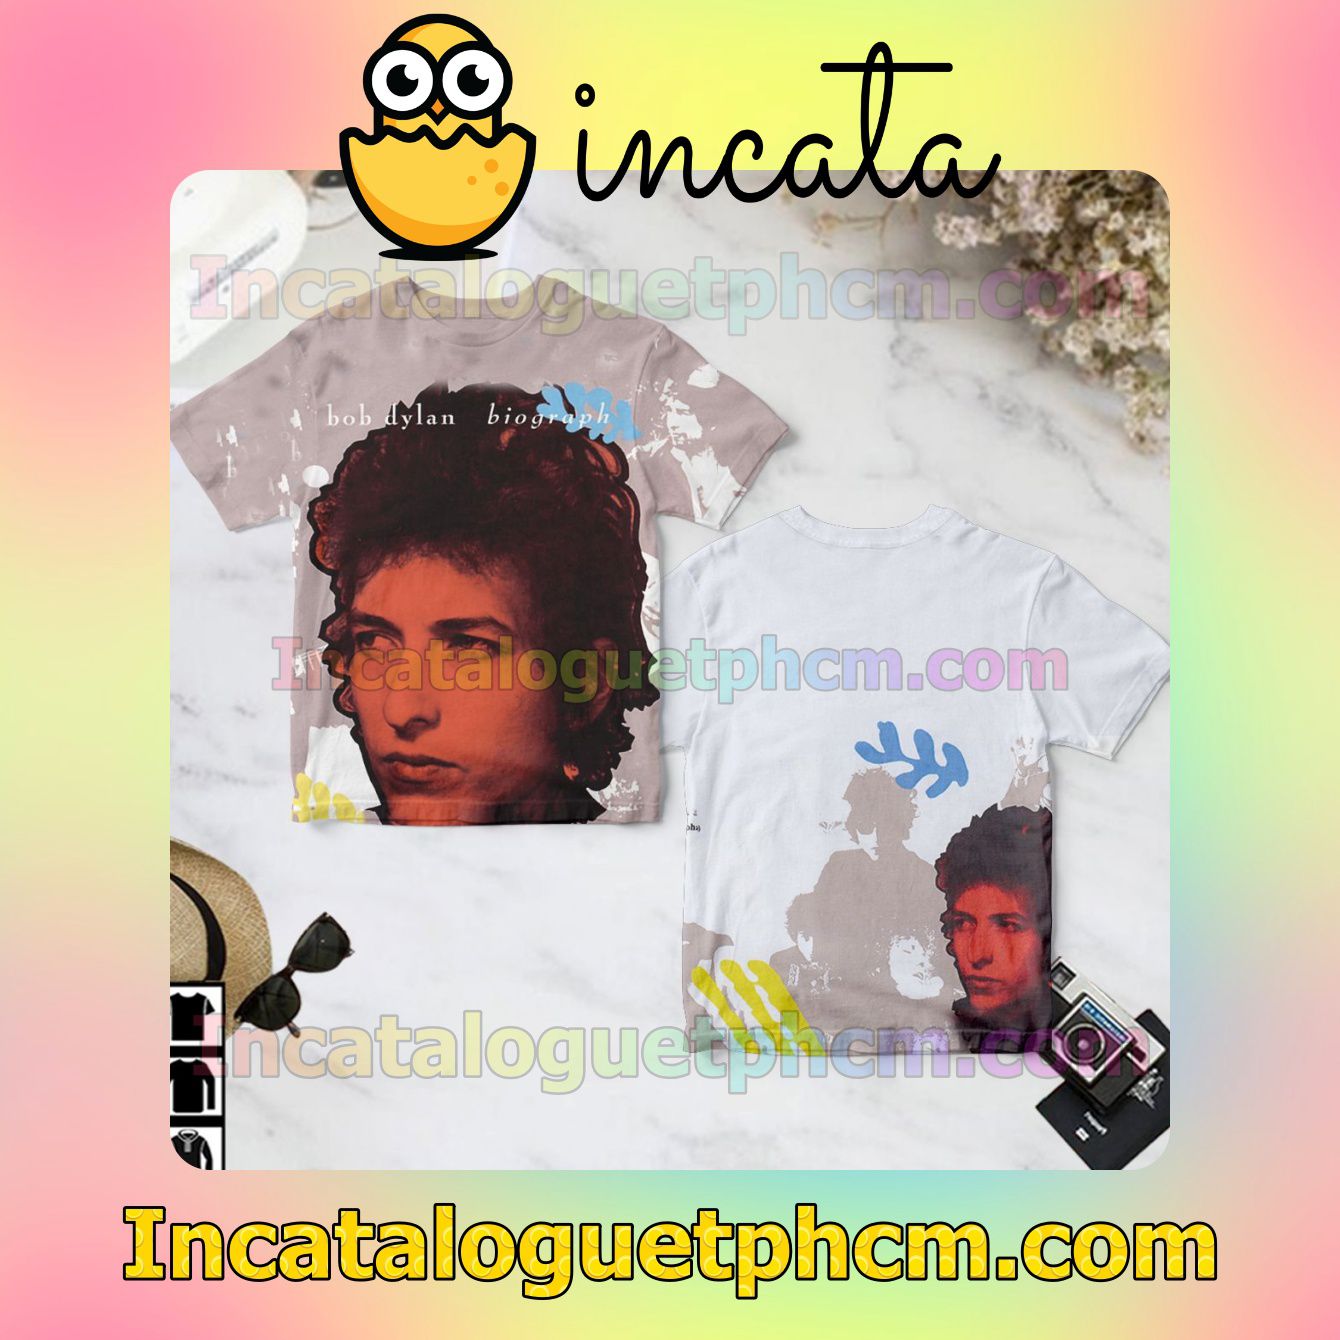 Bob Dylan Biograph Album Cover Gift Shirt